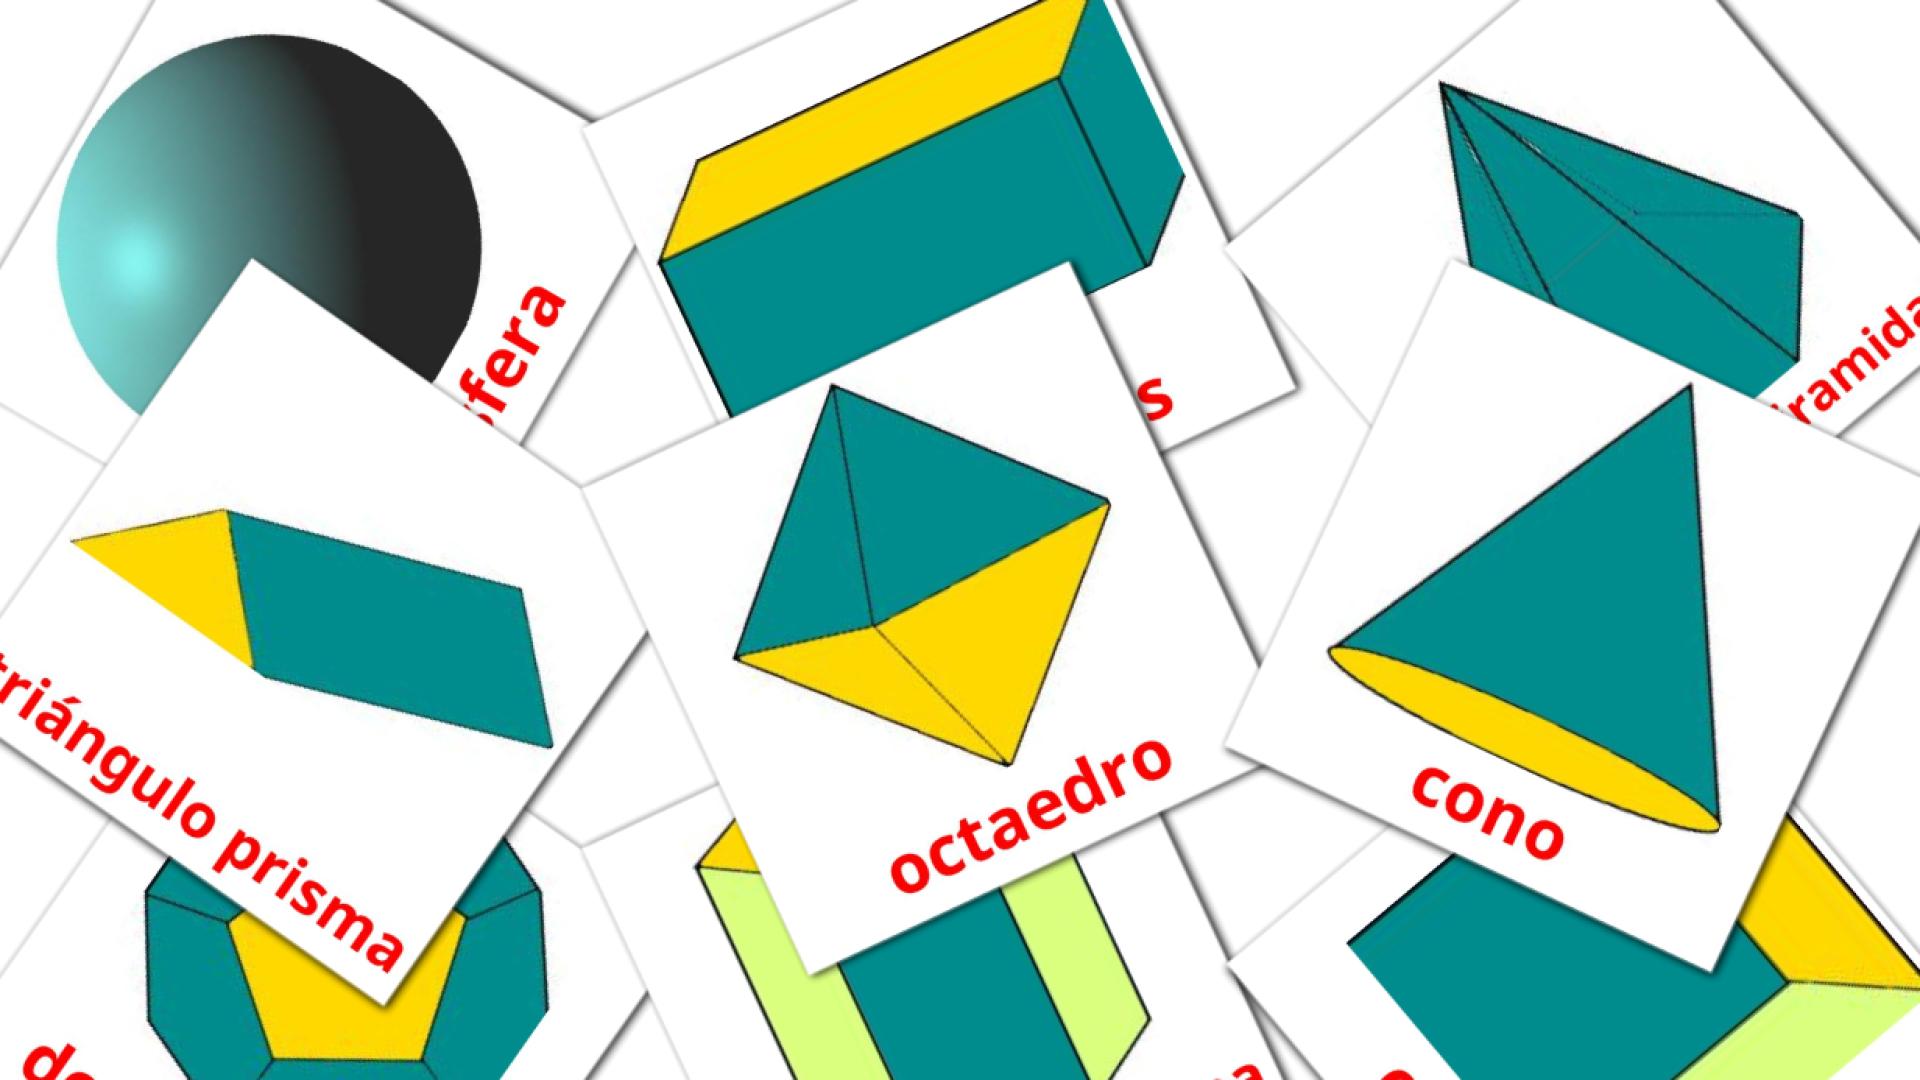 3D Shapes - albanian vocabulary cards